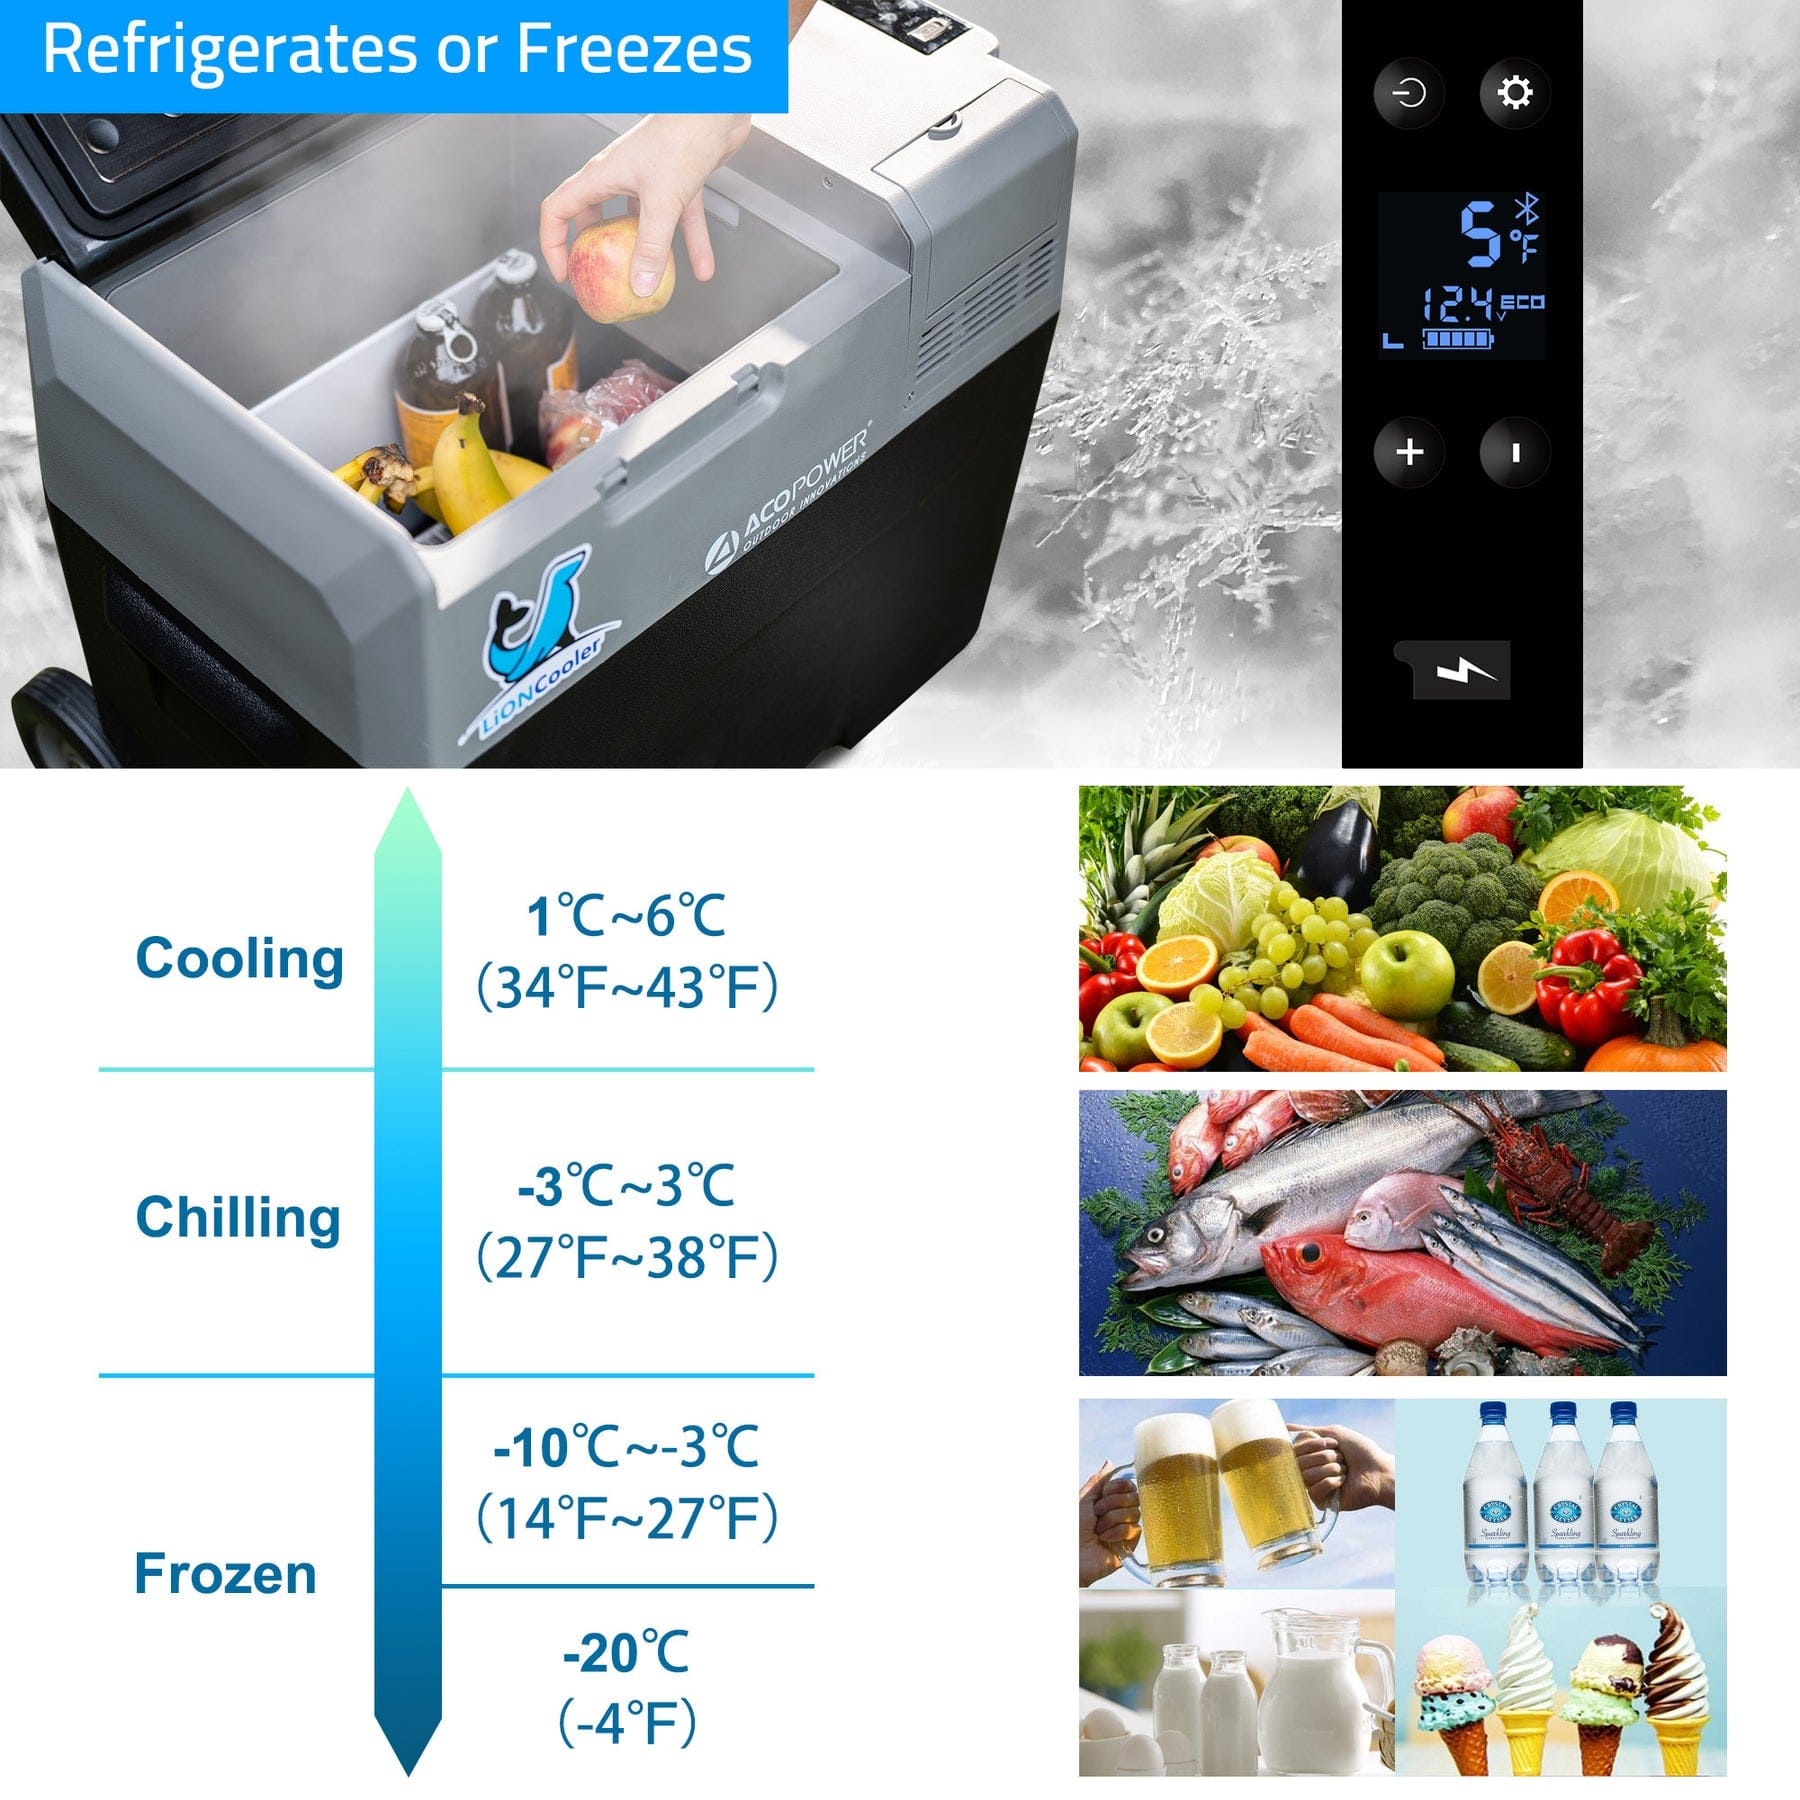 Acopower LiONCooler Pro 42 Quarts Portable Solar Fridge Freezer – Solar  Paradise